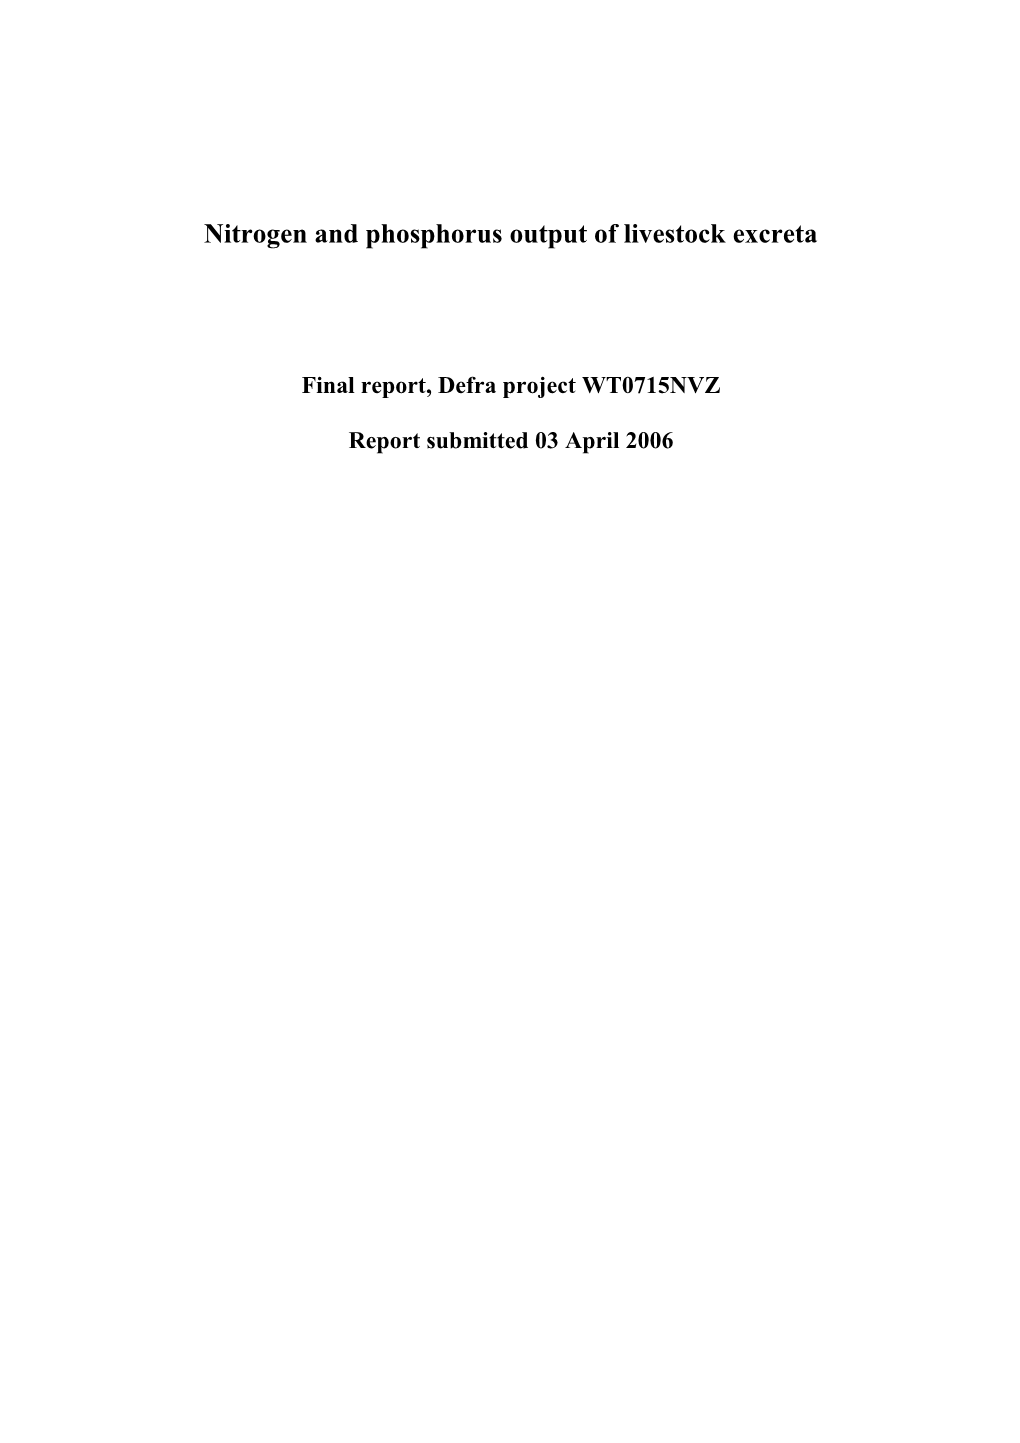 Nitrogen and Phosphorus Output of Livestock Excreta